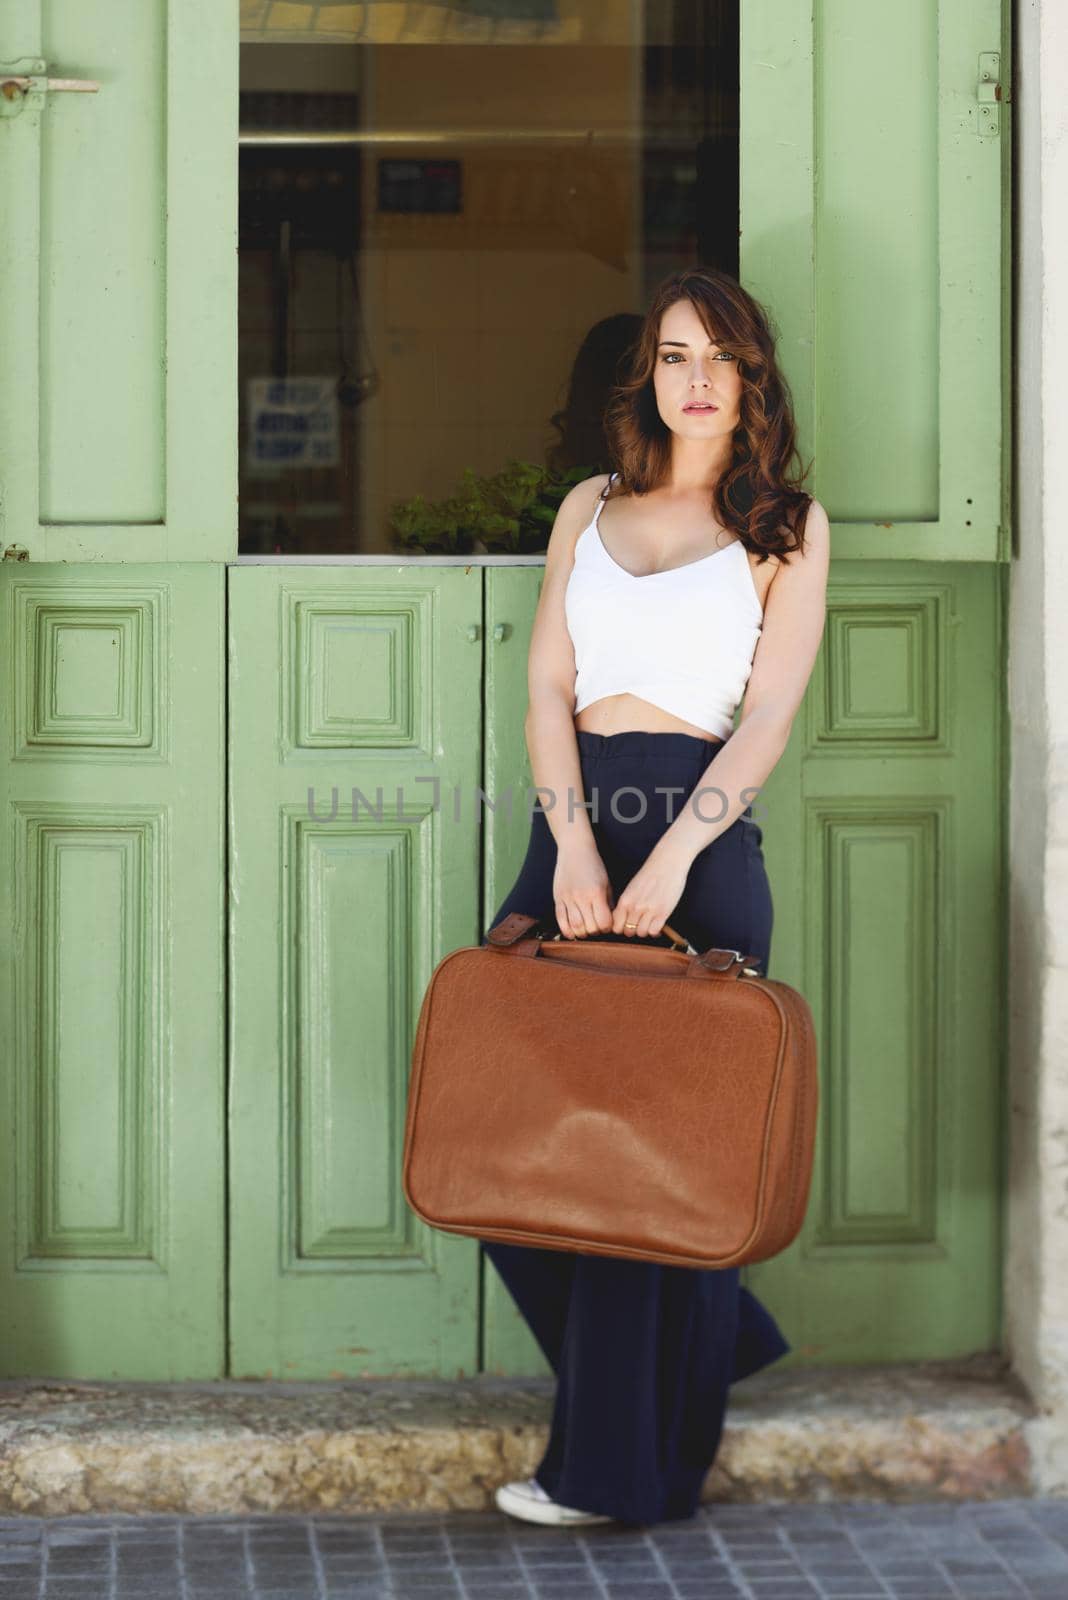 Beautiful girl with vintage bag against green door by javiindy